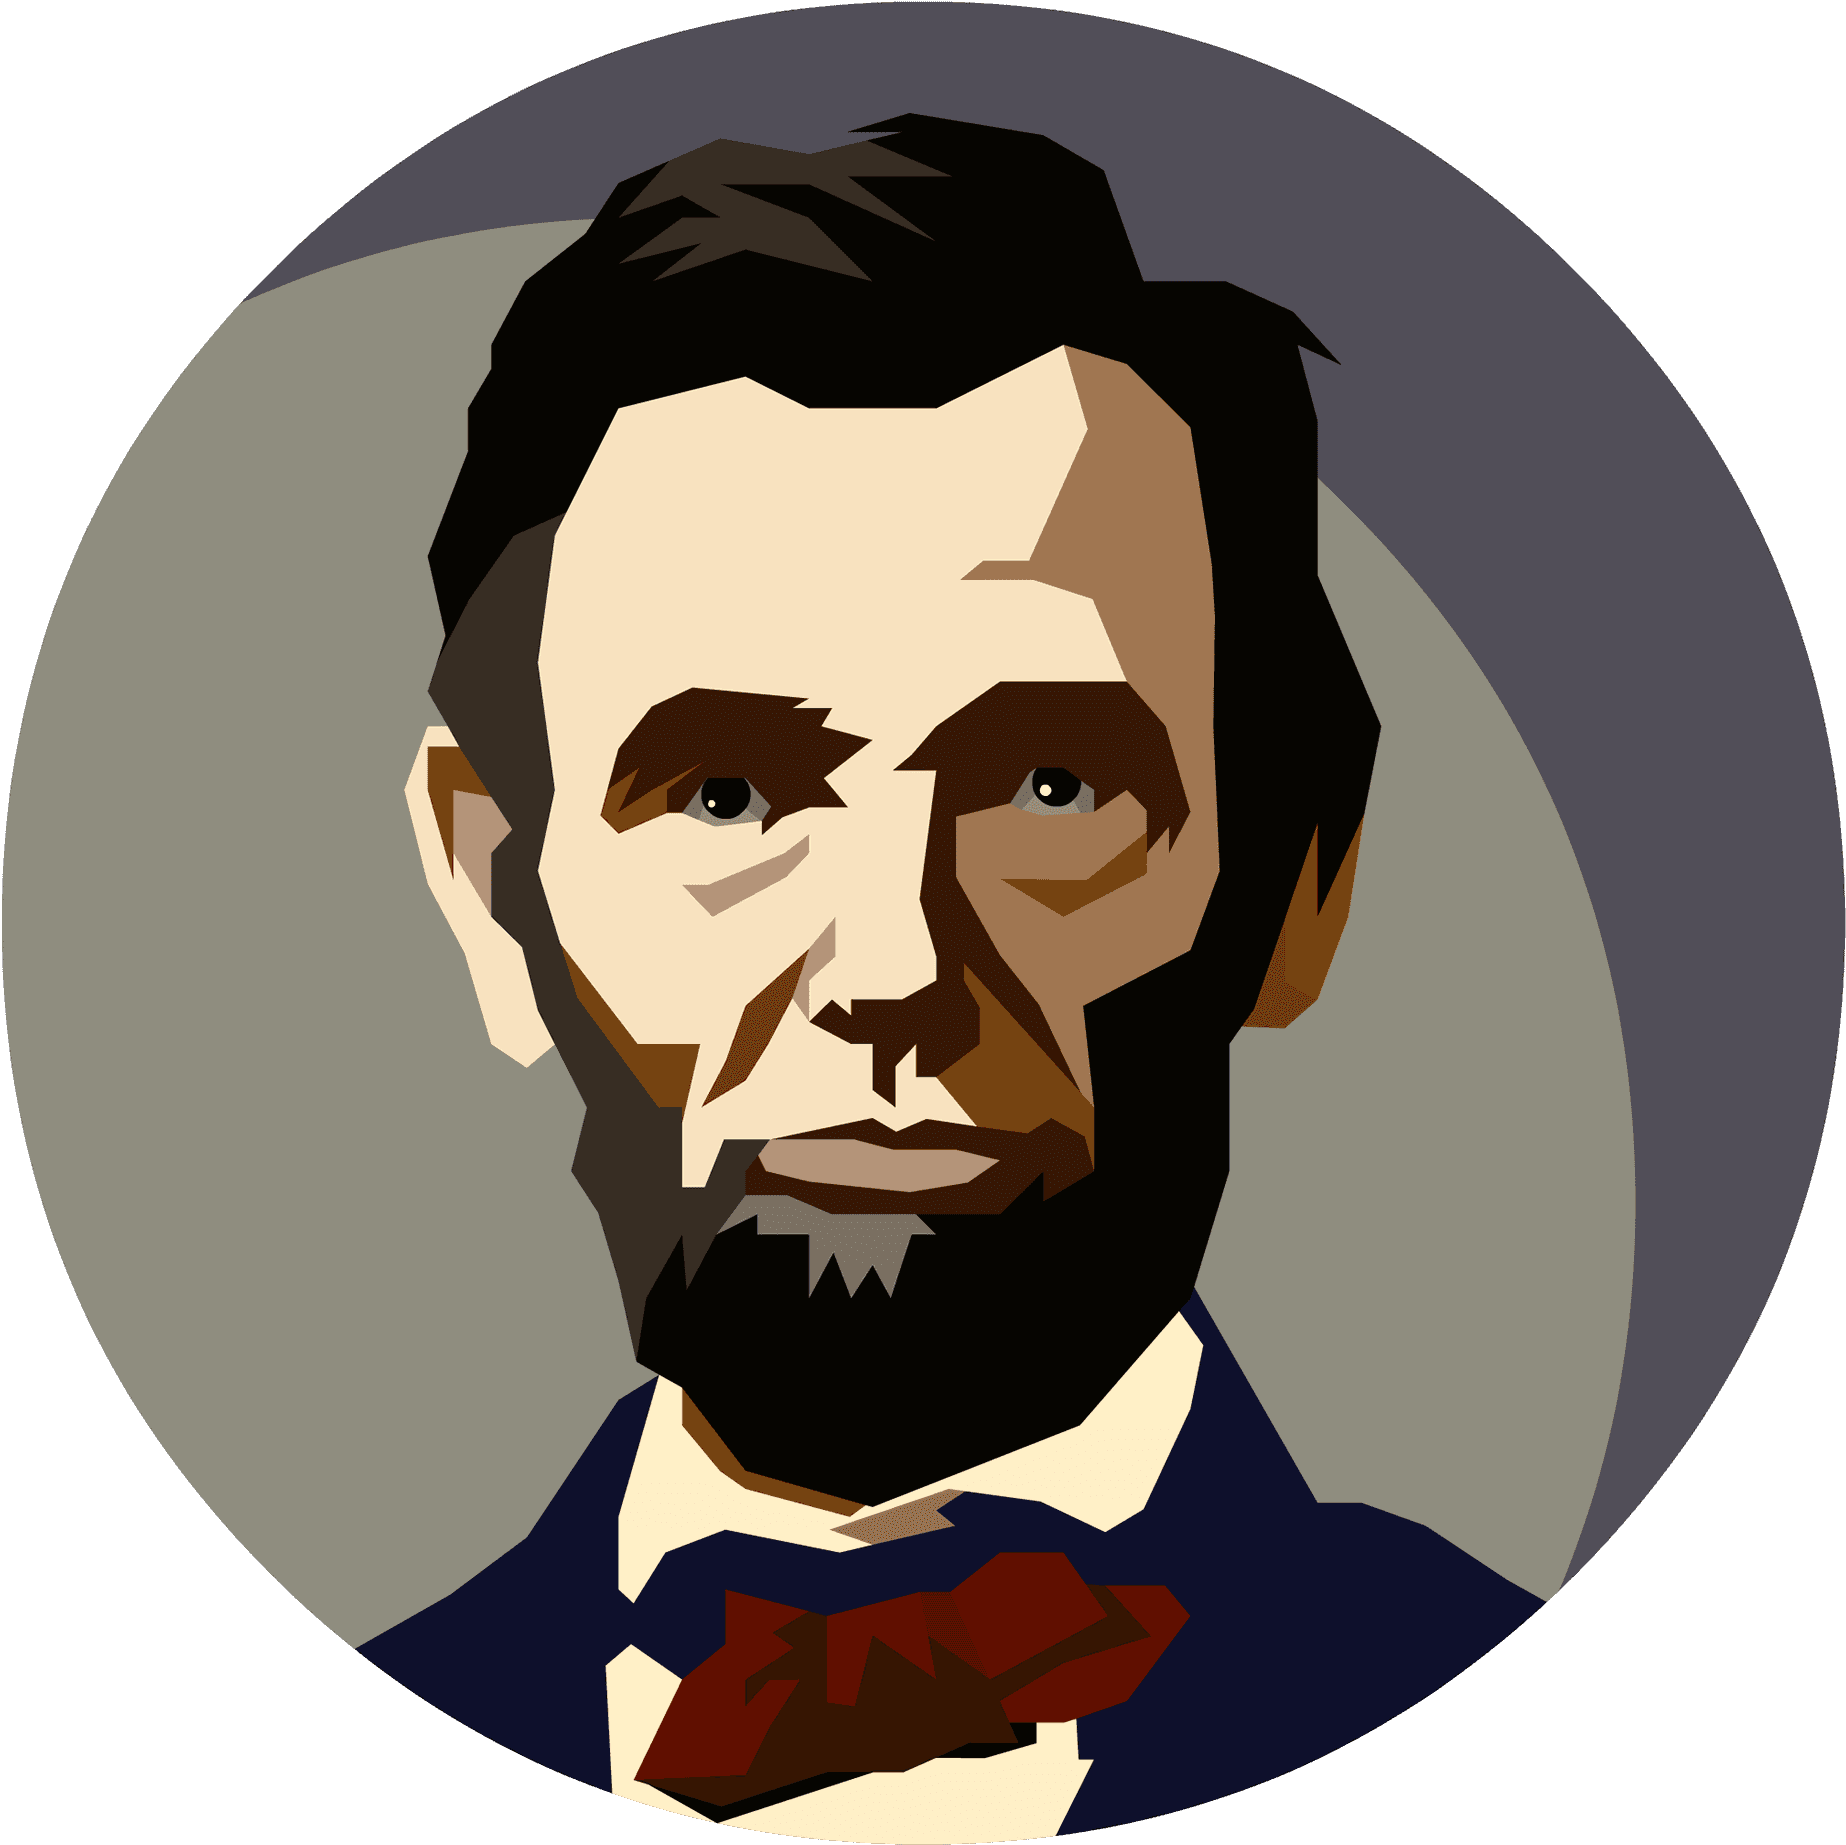 Avator of Abraham Lincoln